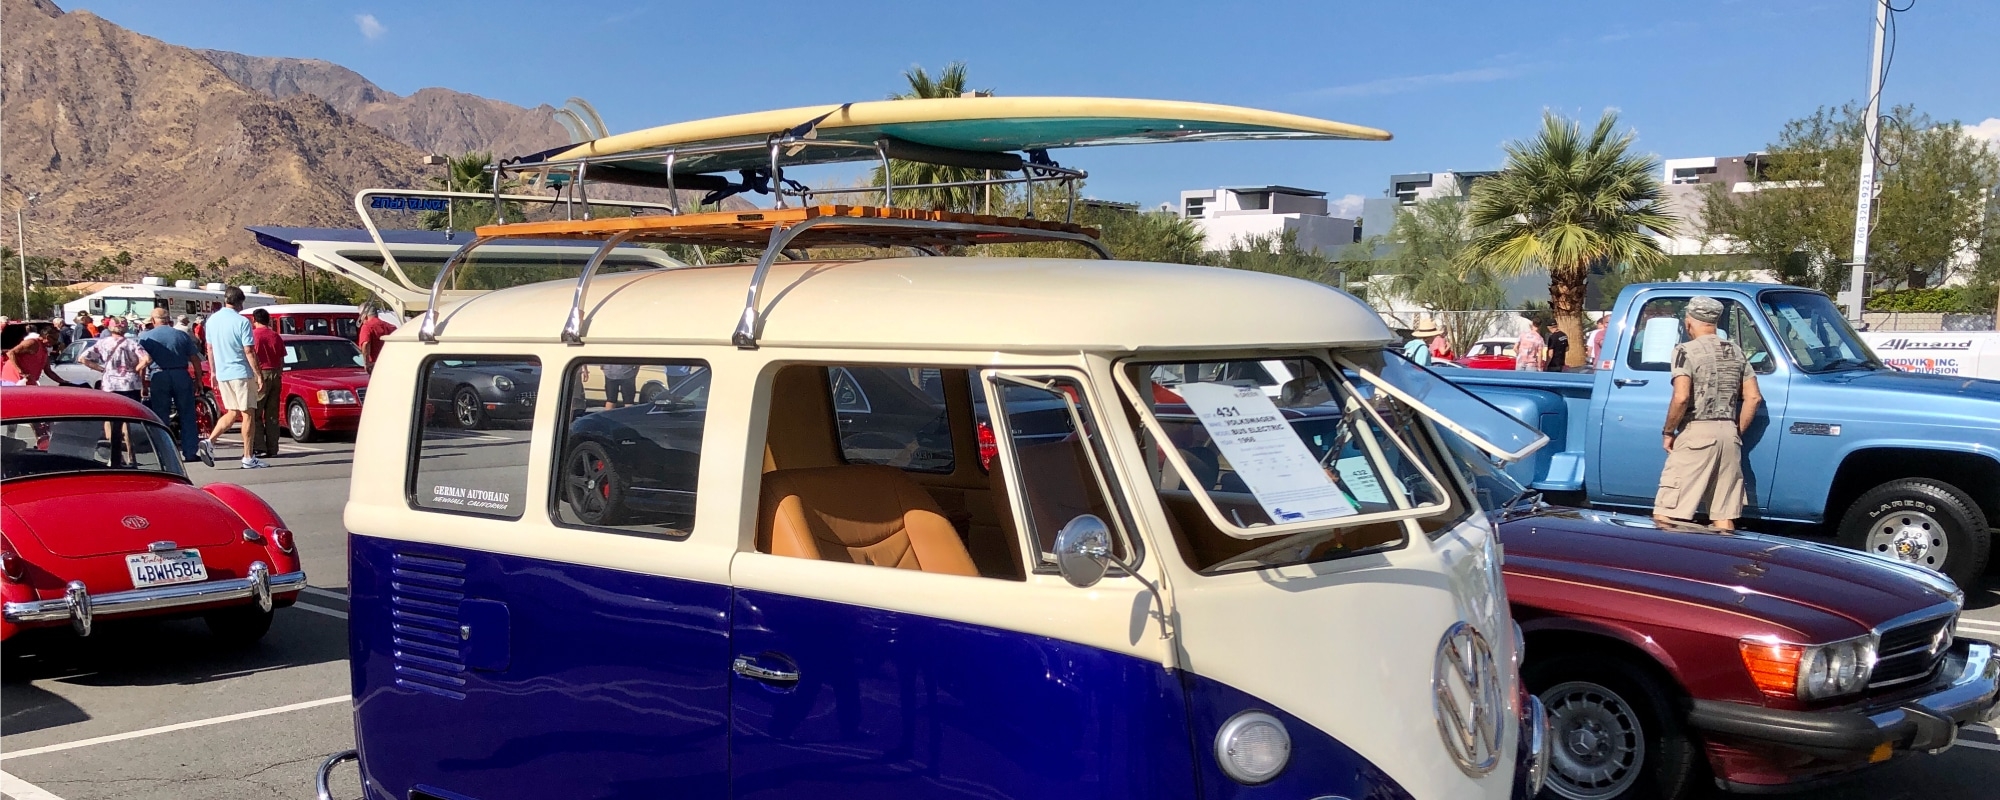 Palm-Springs-Volkswagon-Bus-Surf